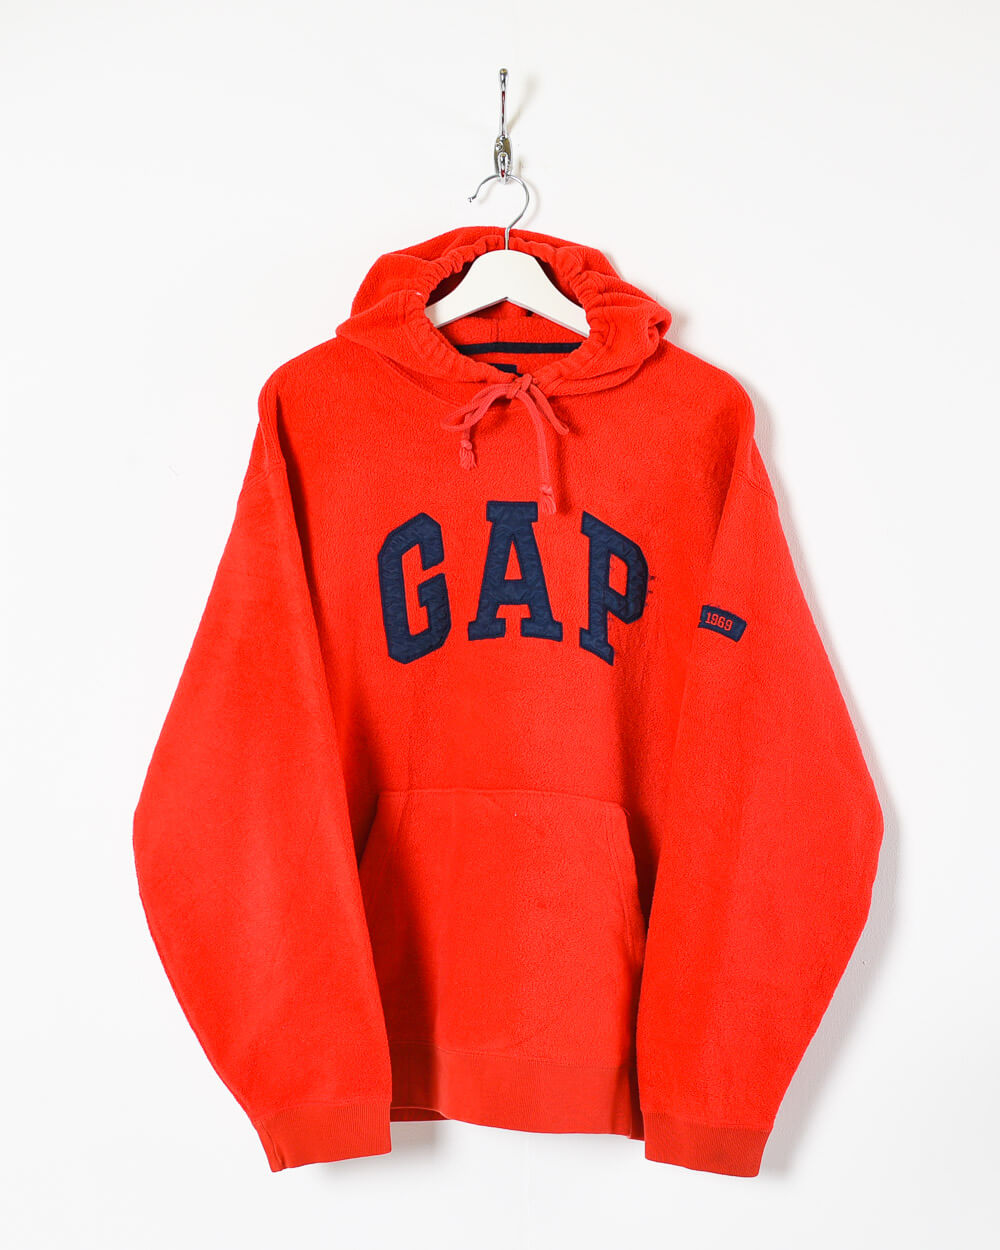 Orange Gap Hooded Fleece - Medium